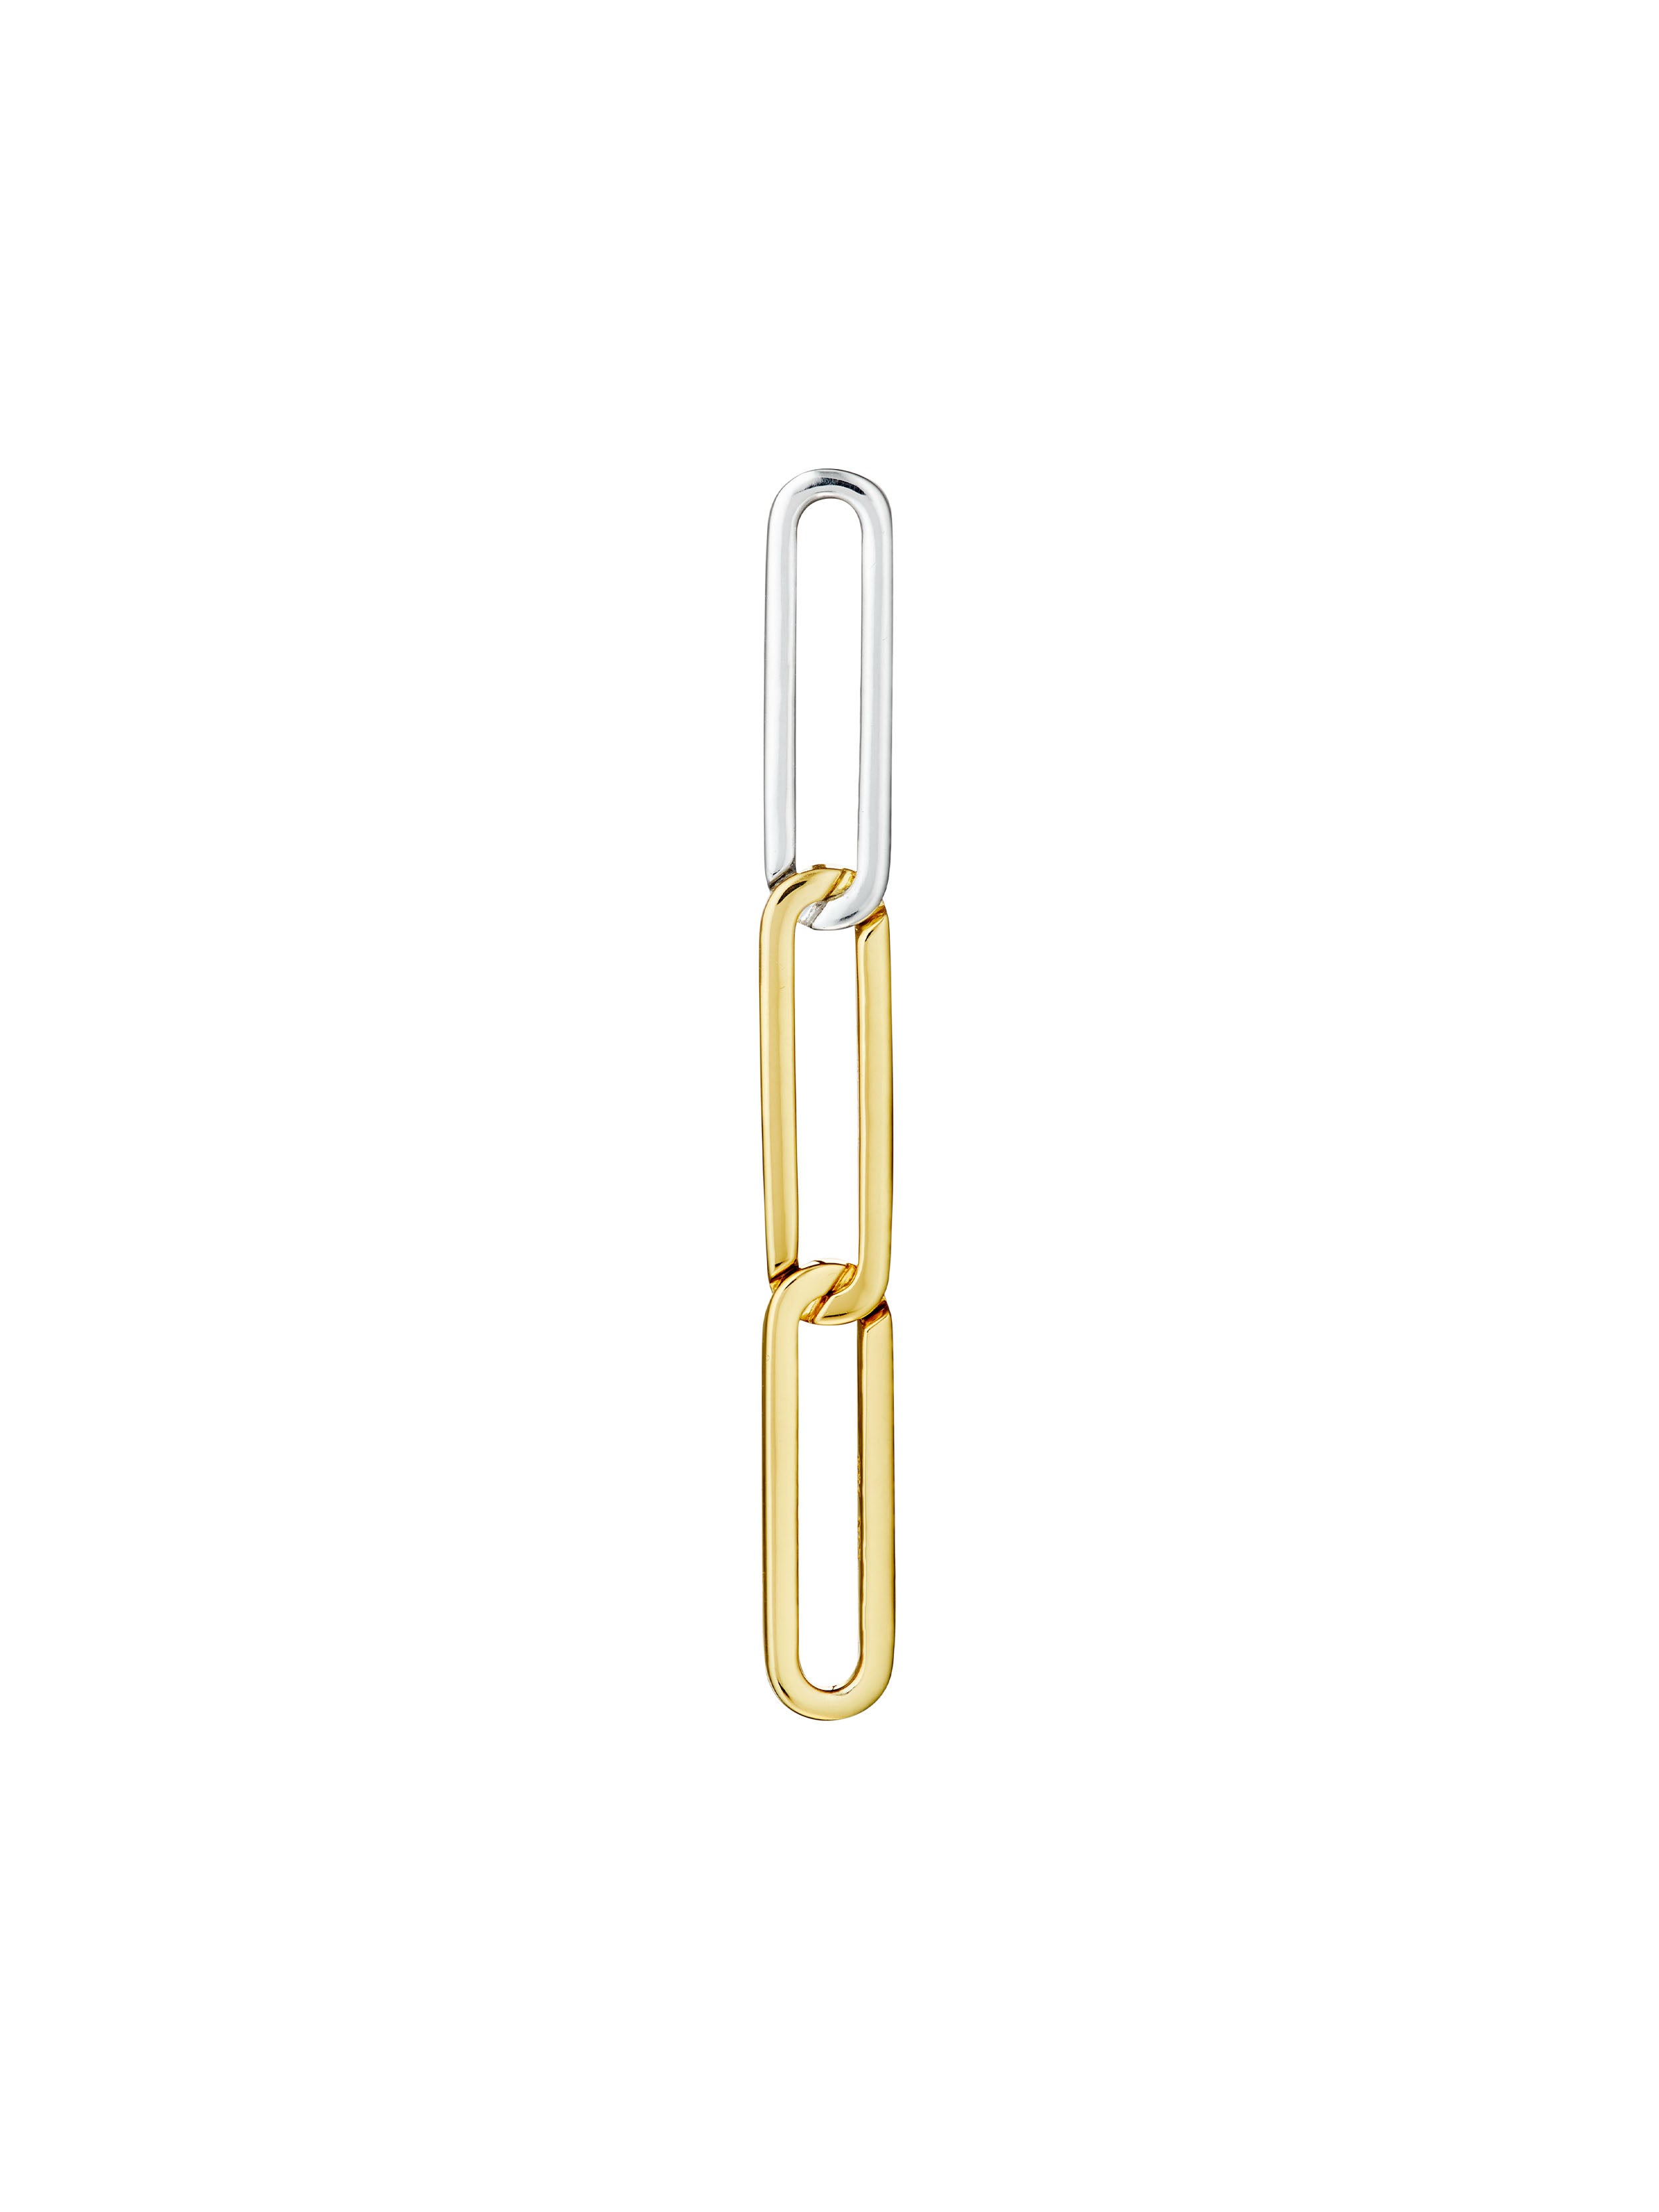 KINRADEN APS THE SIGH III MEDIUM Earring - 18k gold, 1 silver link Earrings